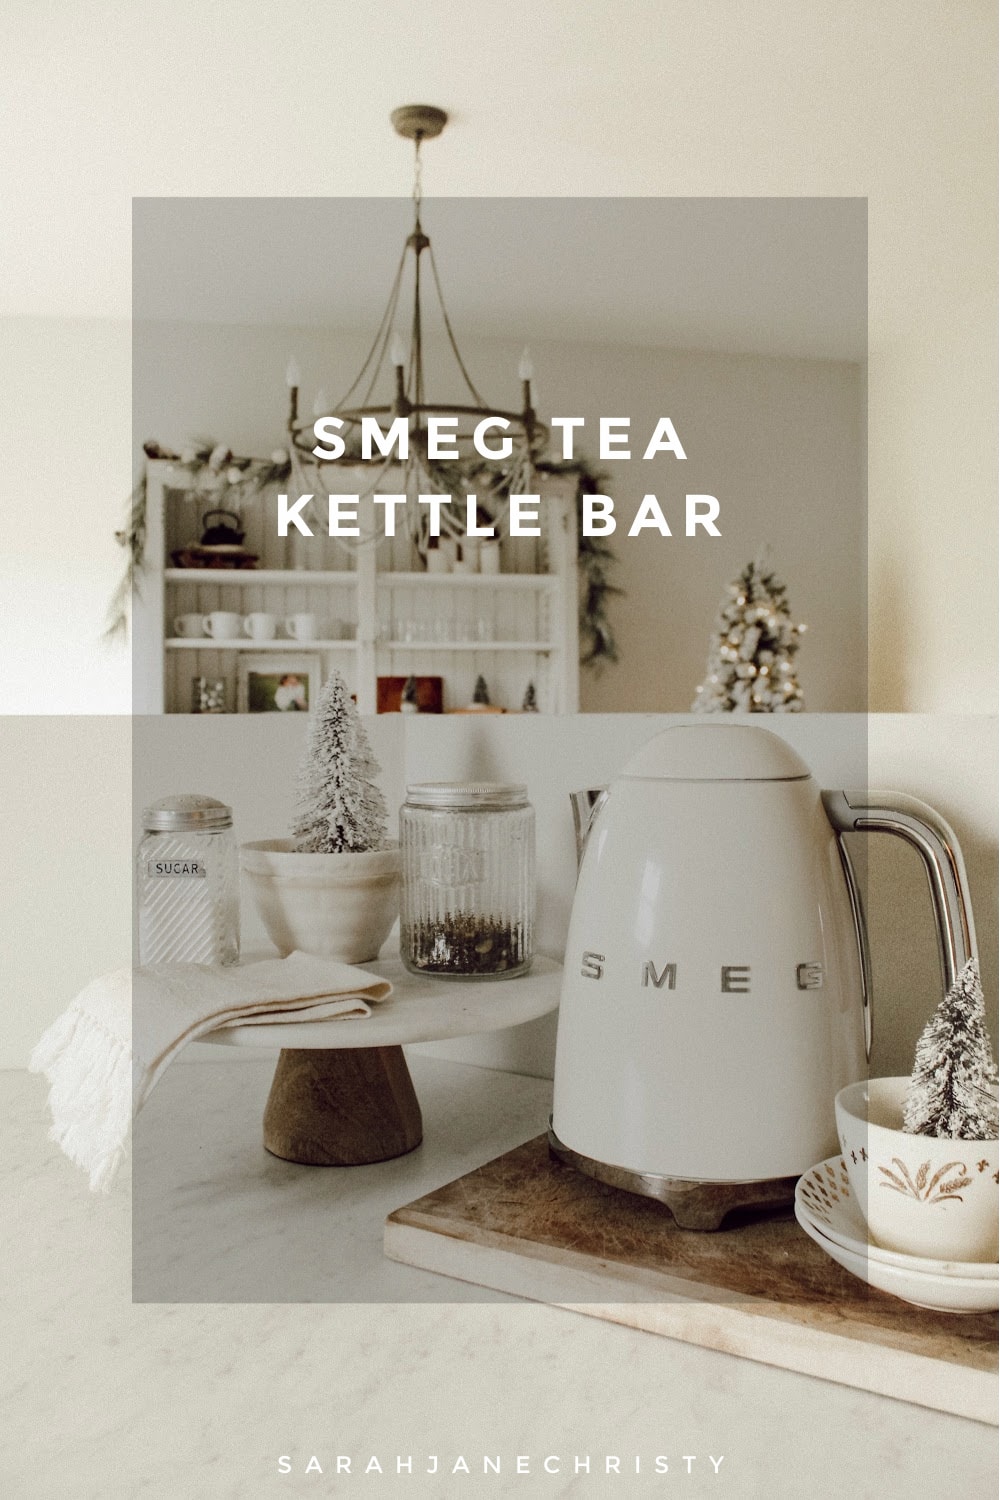 Mini Tea Bar SMEG Kettle - Sarah Jane Christy